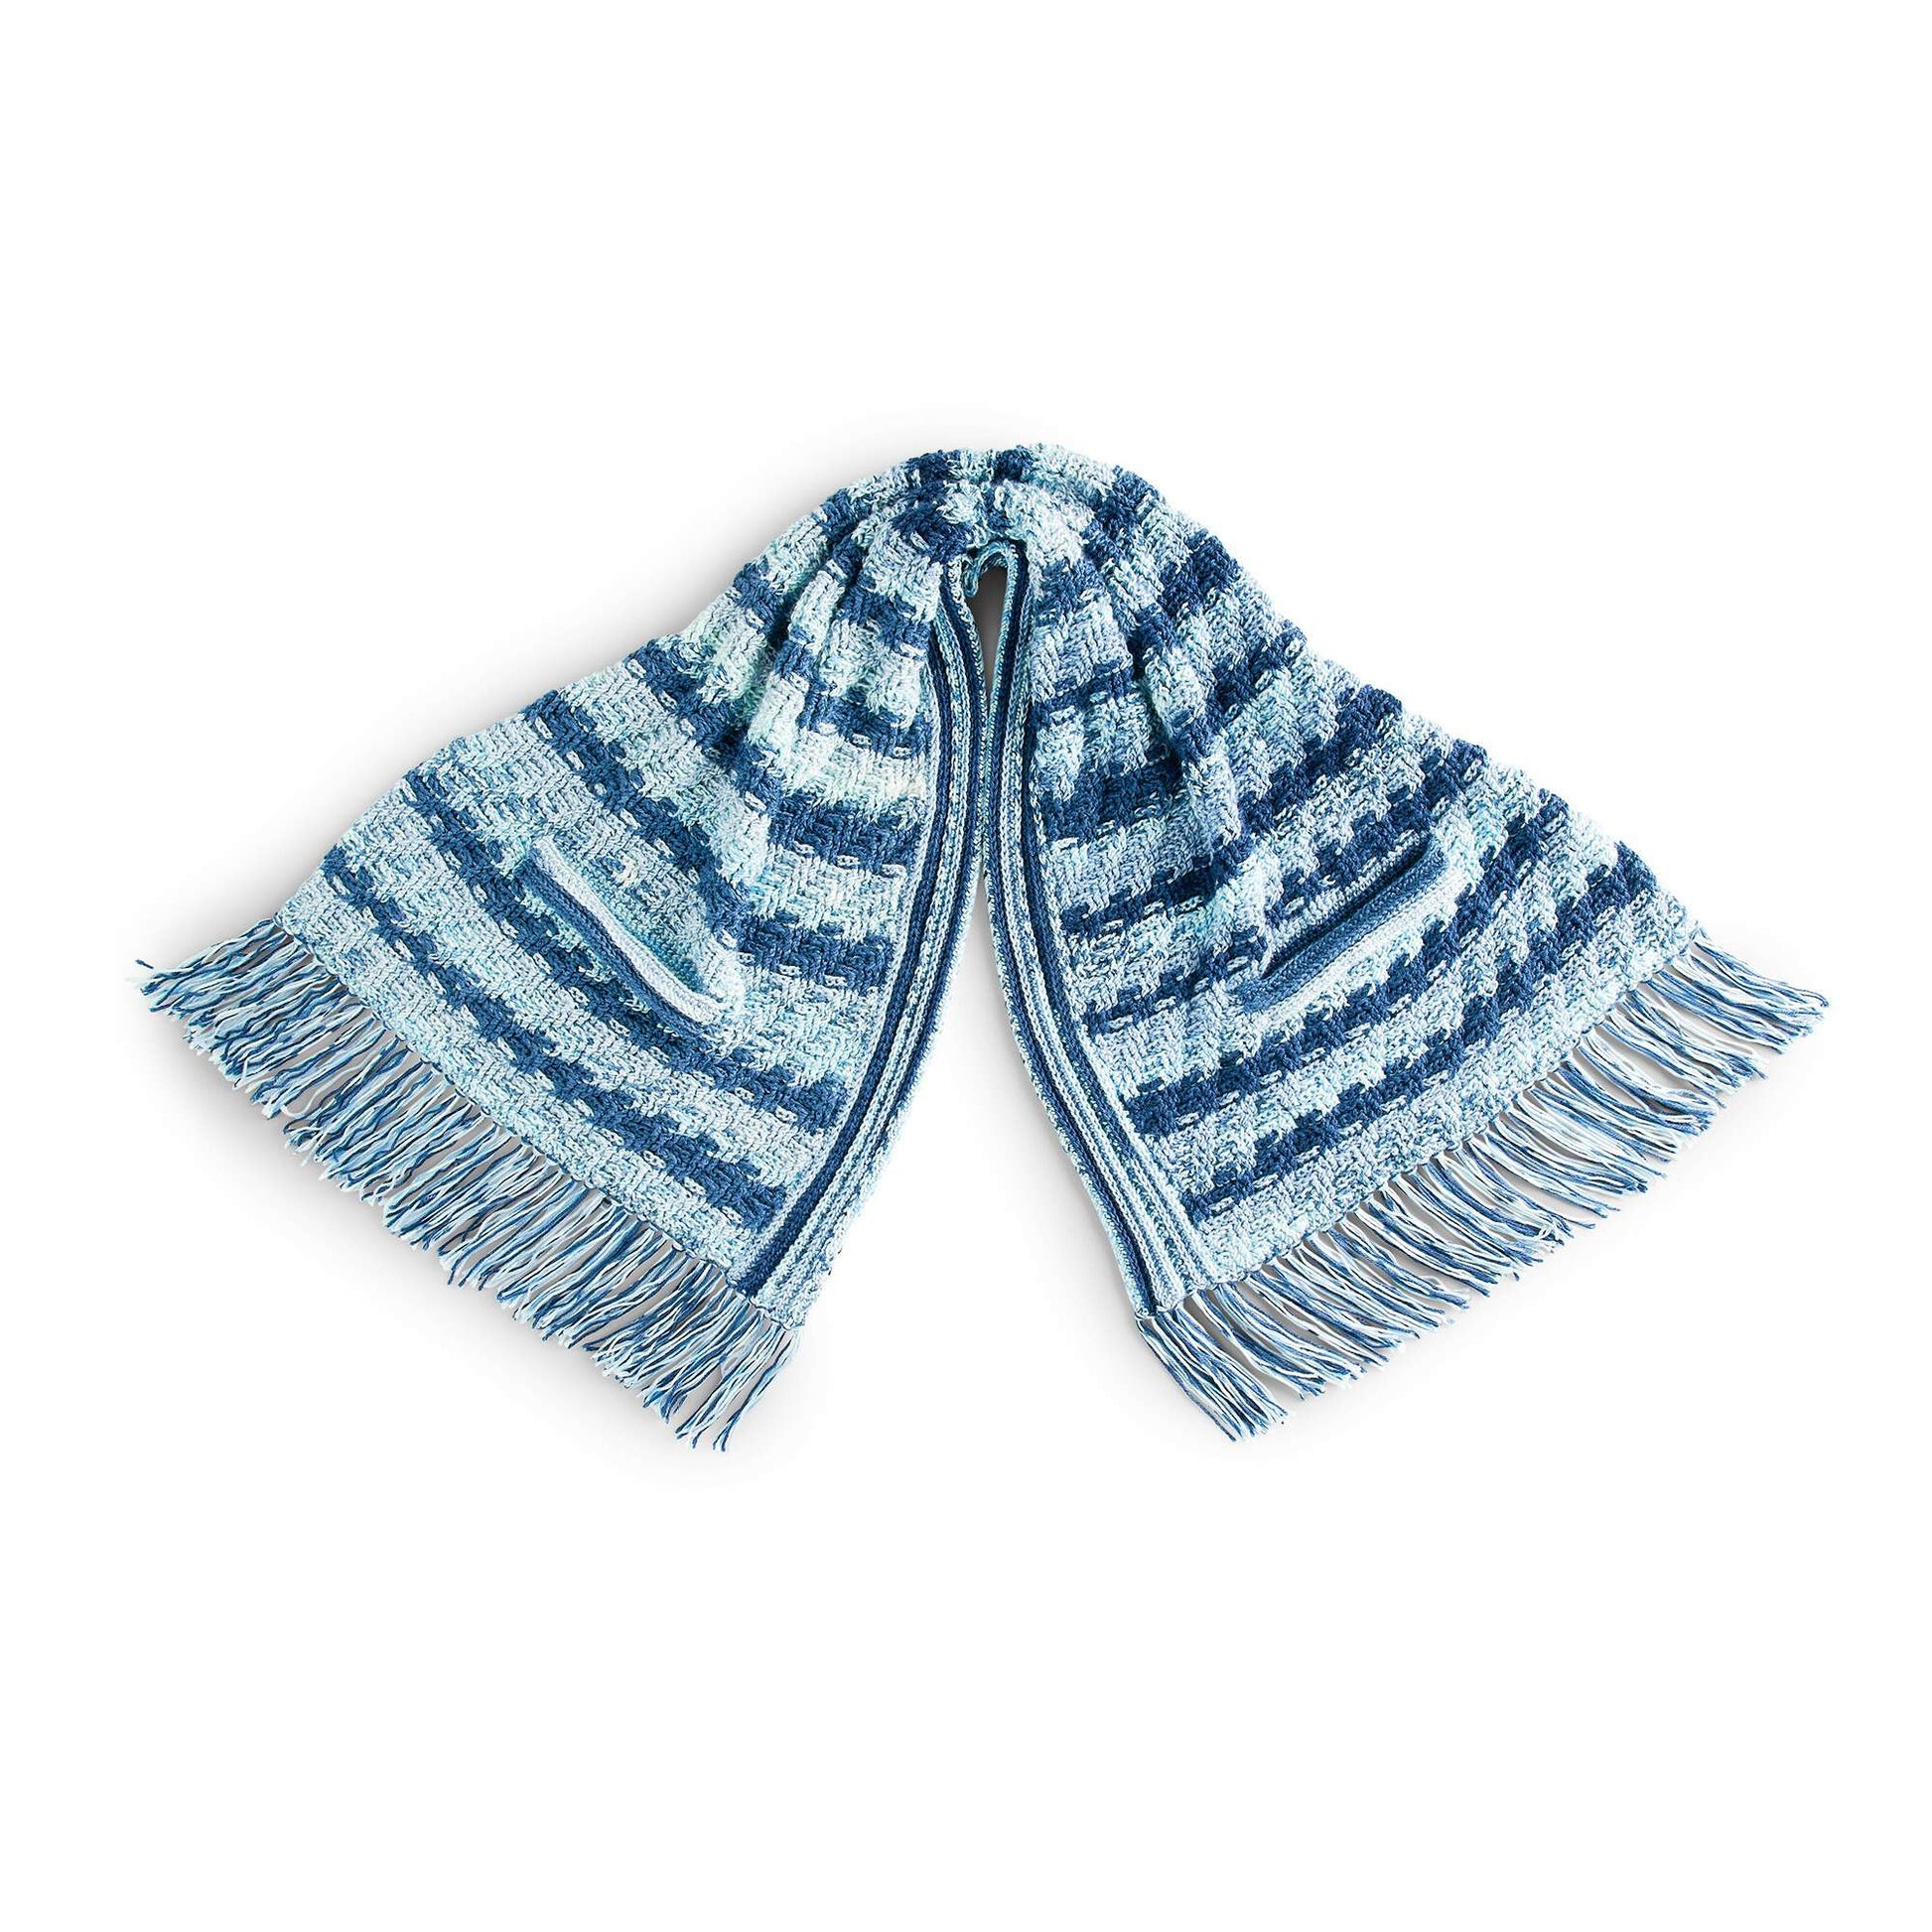 Free Caron Stripes & Texture Crochet Pocket Shawl Pattern